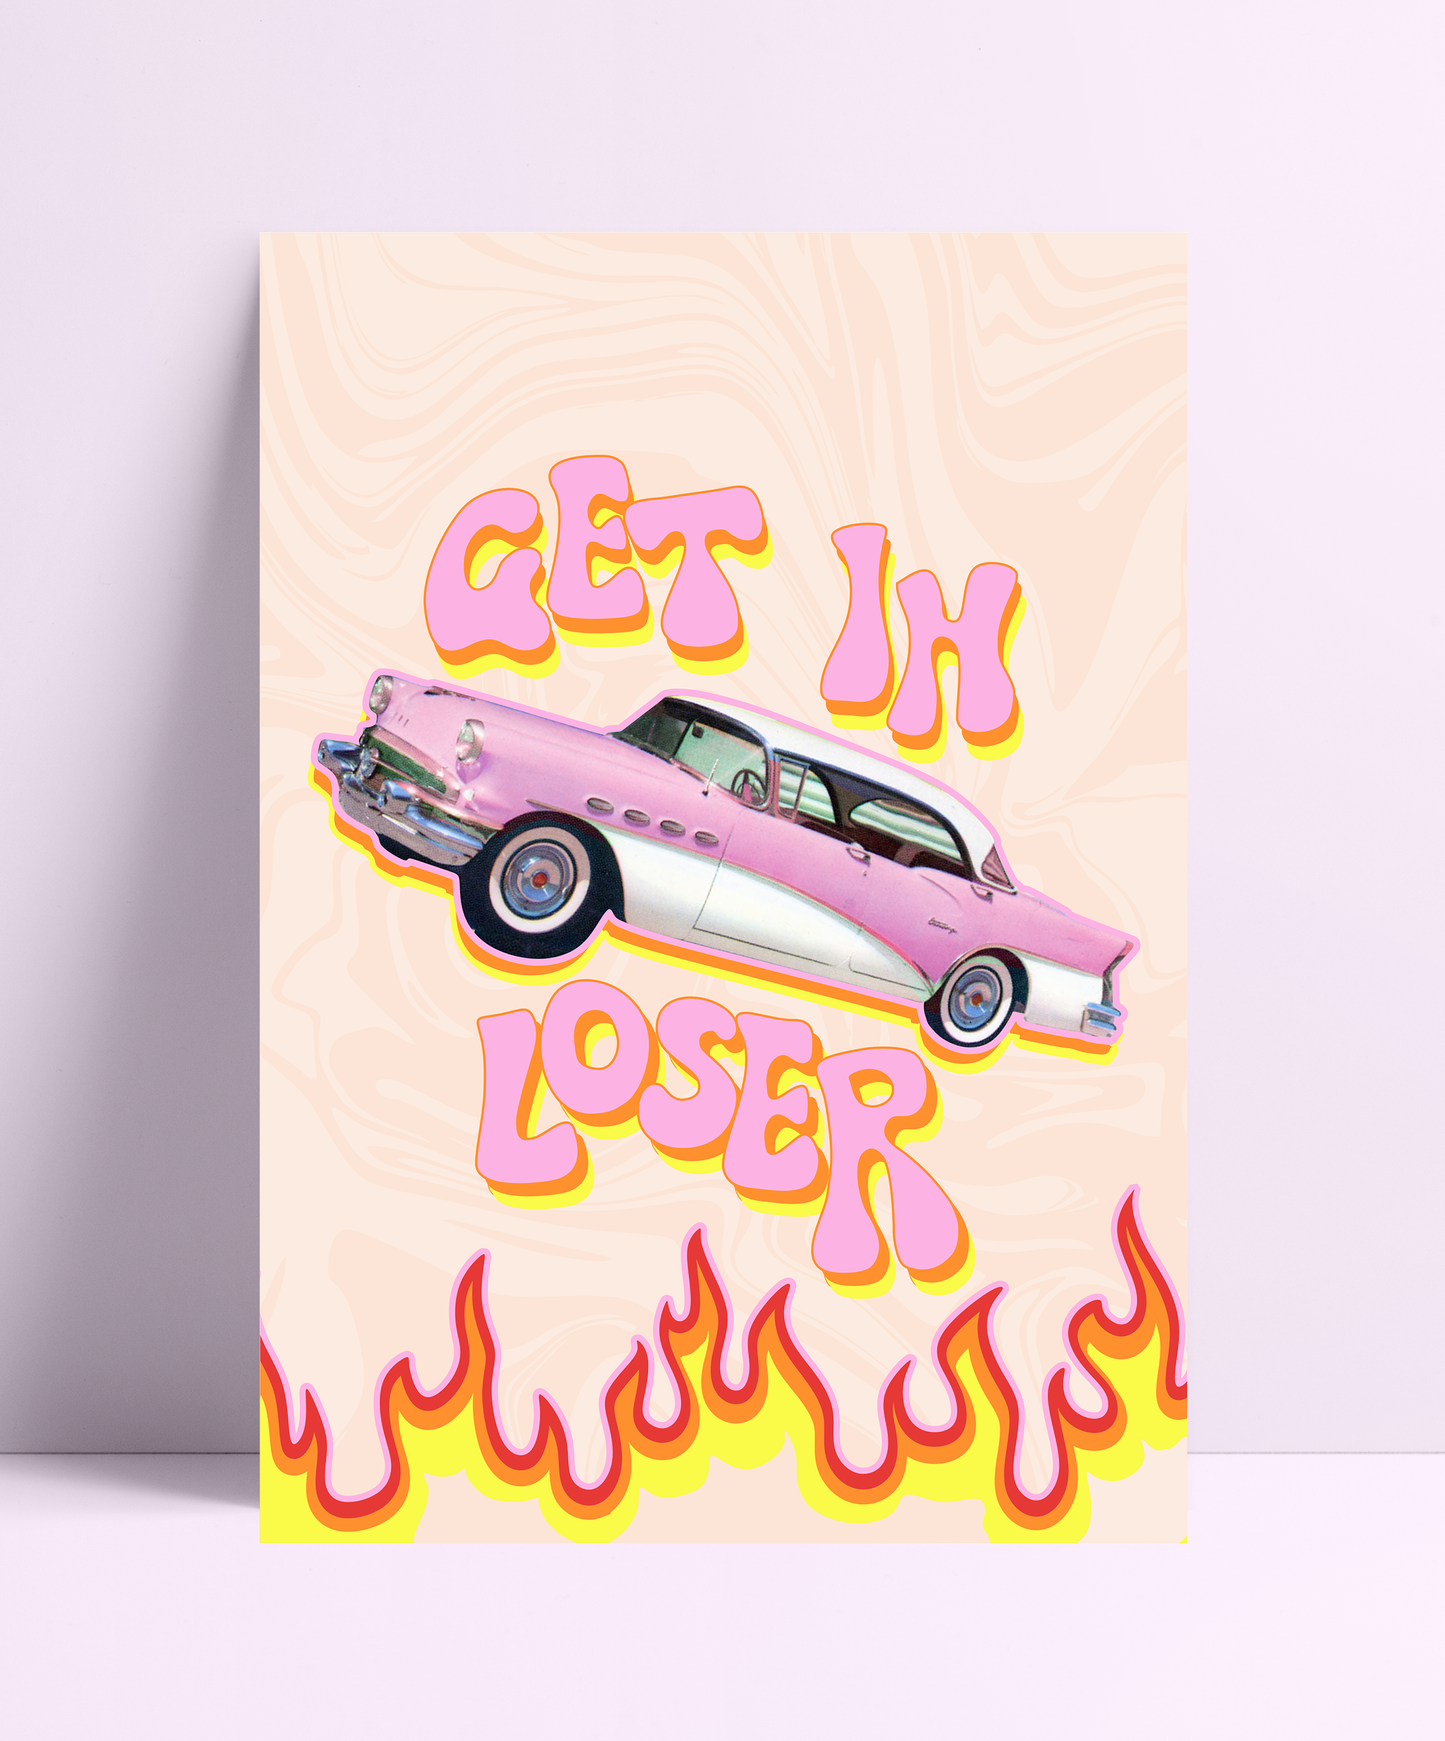 Get In Loser Wall Print